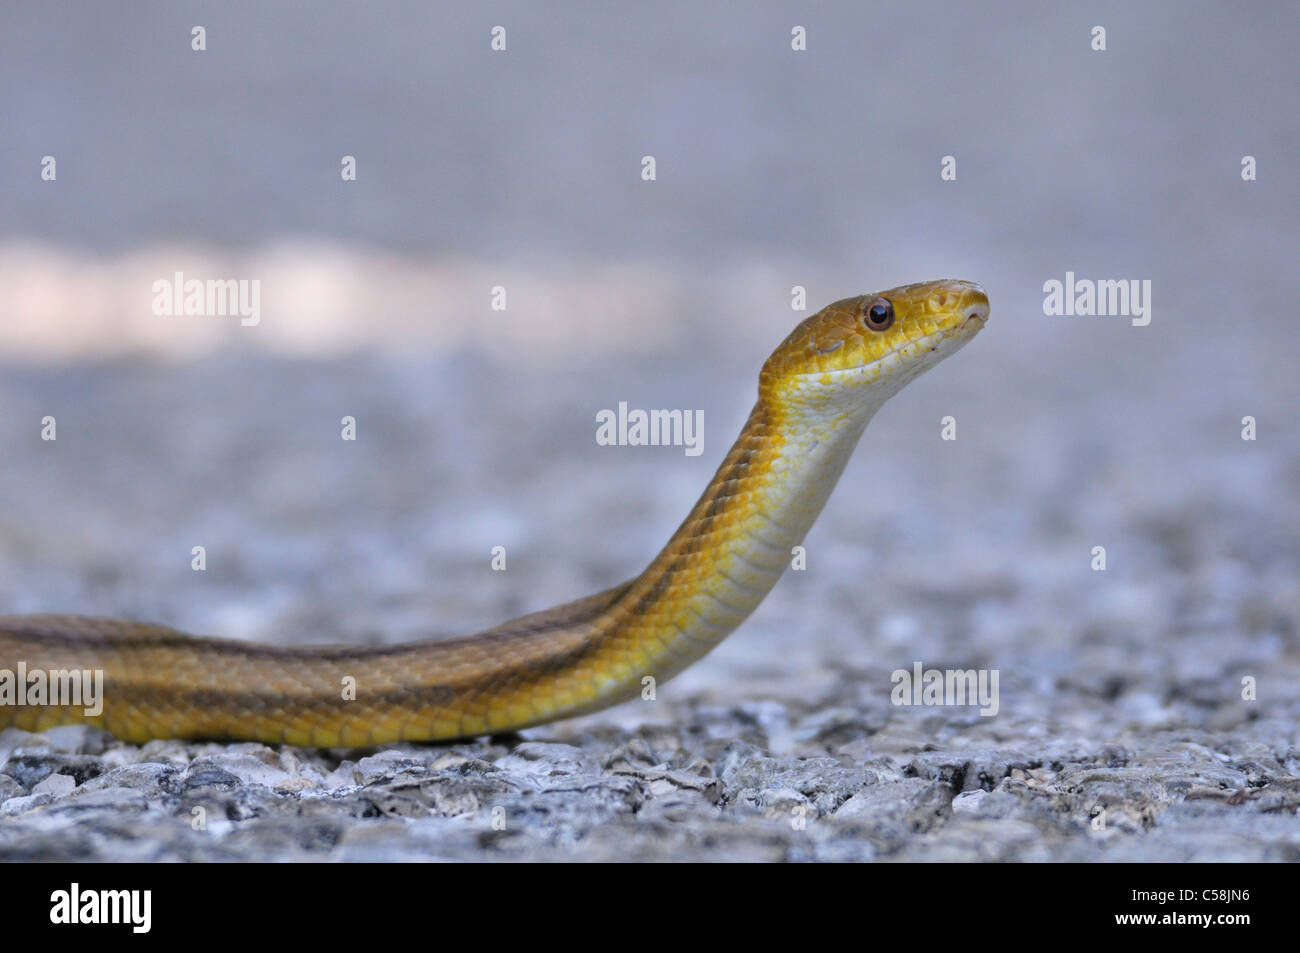 Giallo Ratsnake, snake, J. N. Ding Darling, National Wildlife Refuge, Foto Stock